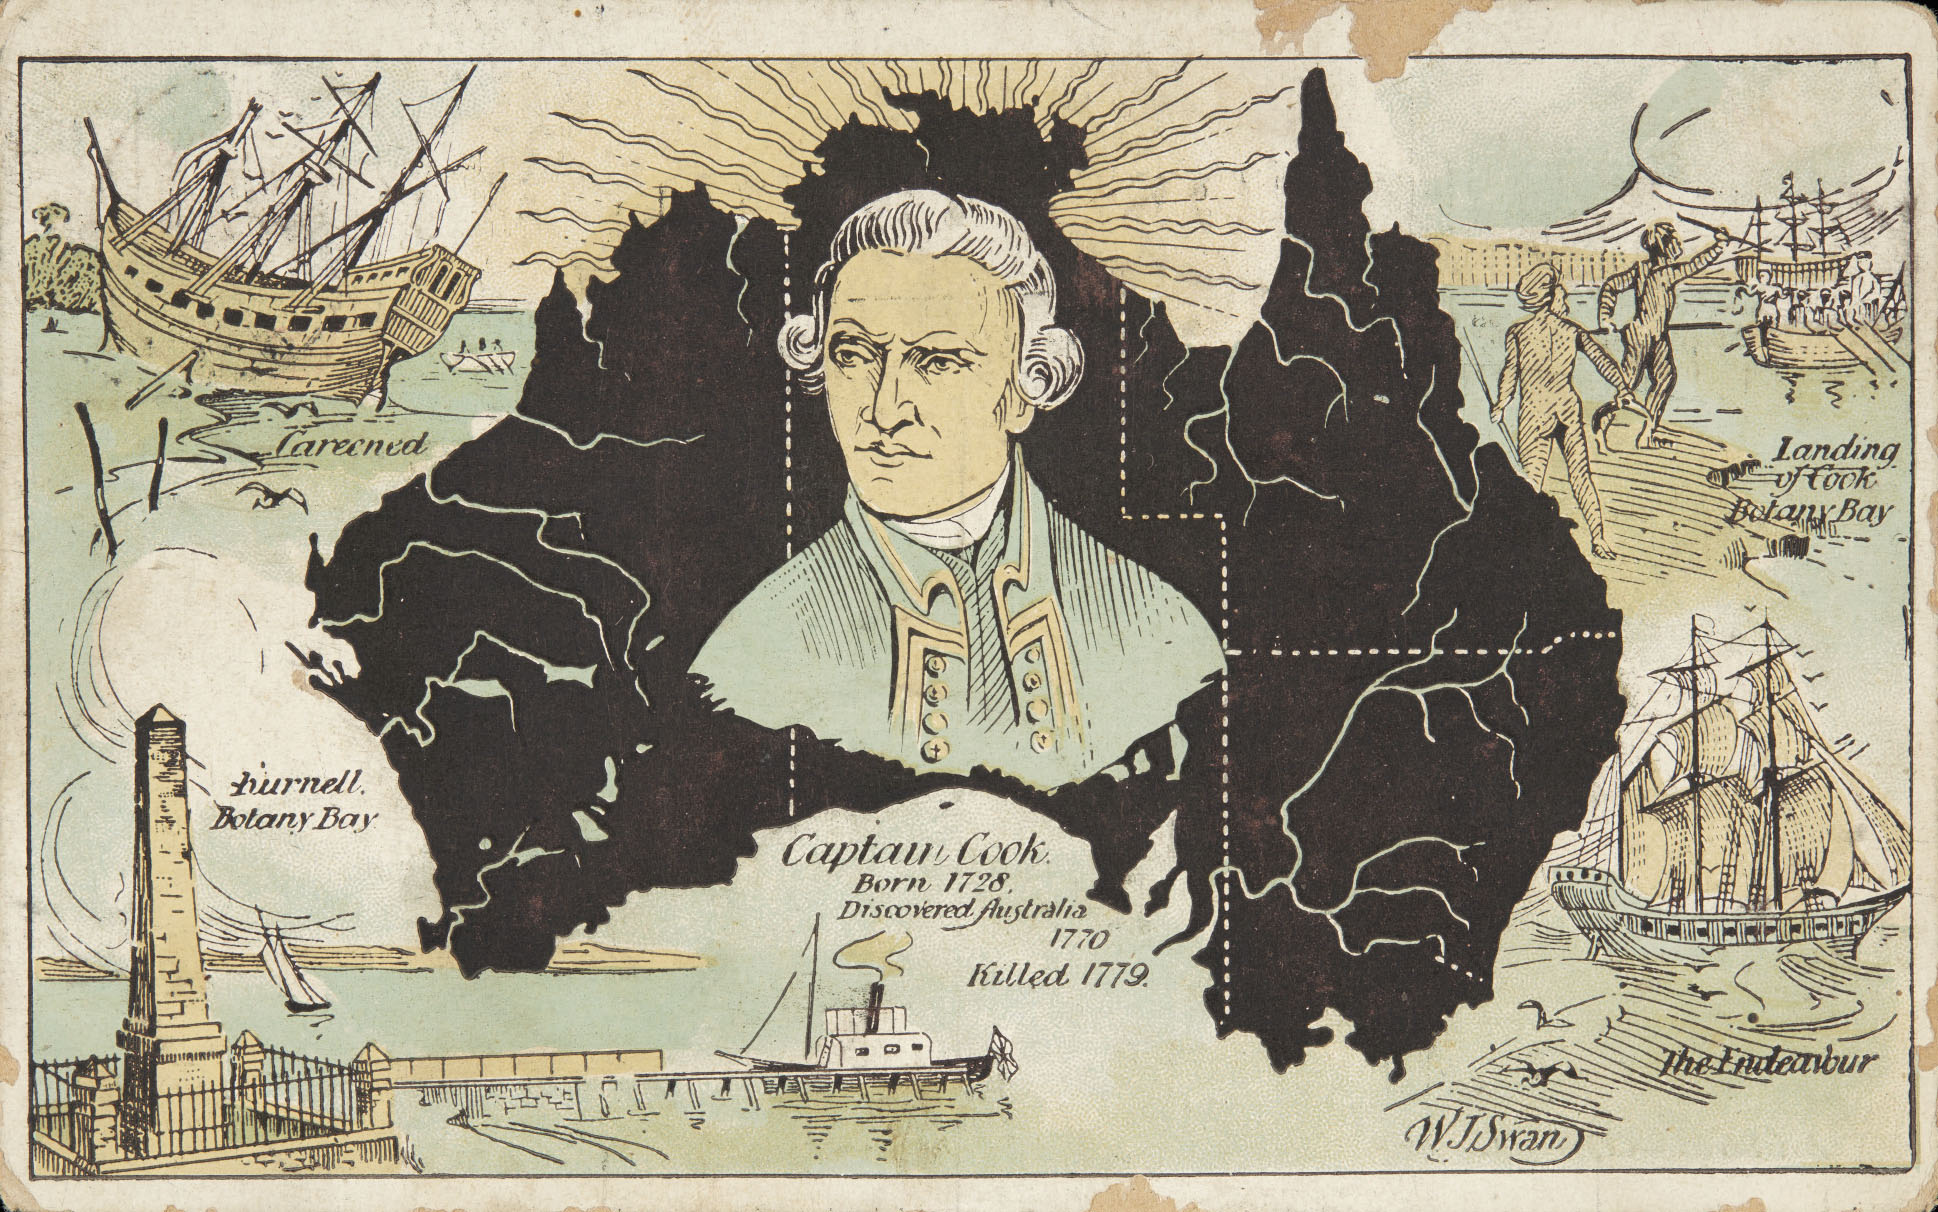  Postcard titled ‘Captain Cook, Born 1728, Discovered Australia 1770, Killed 1779’.